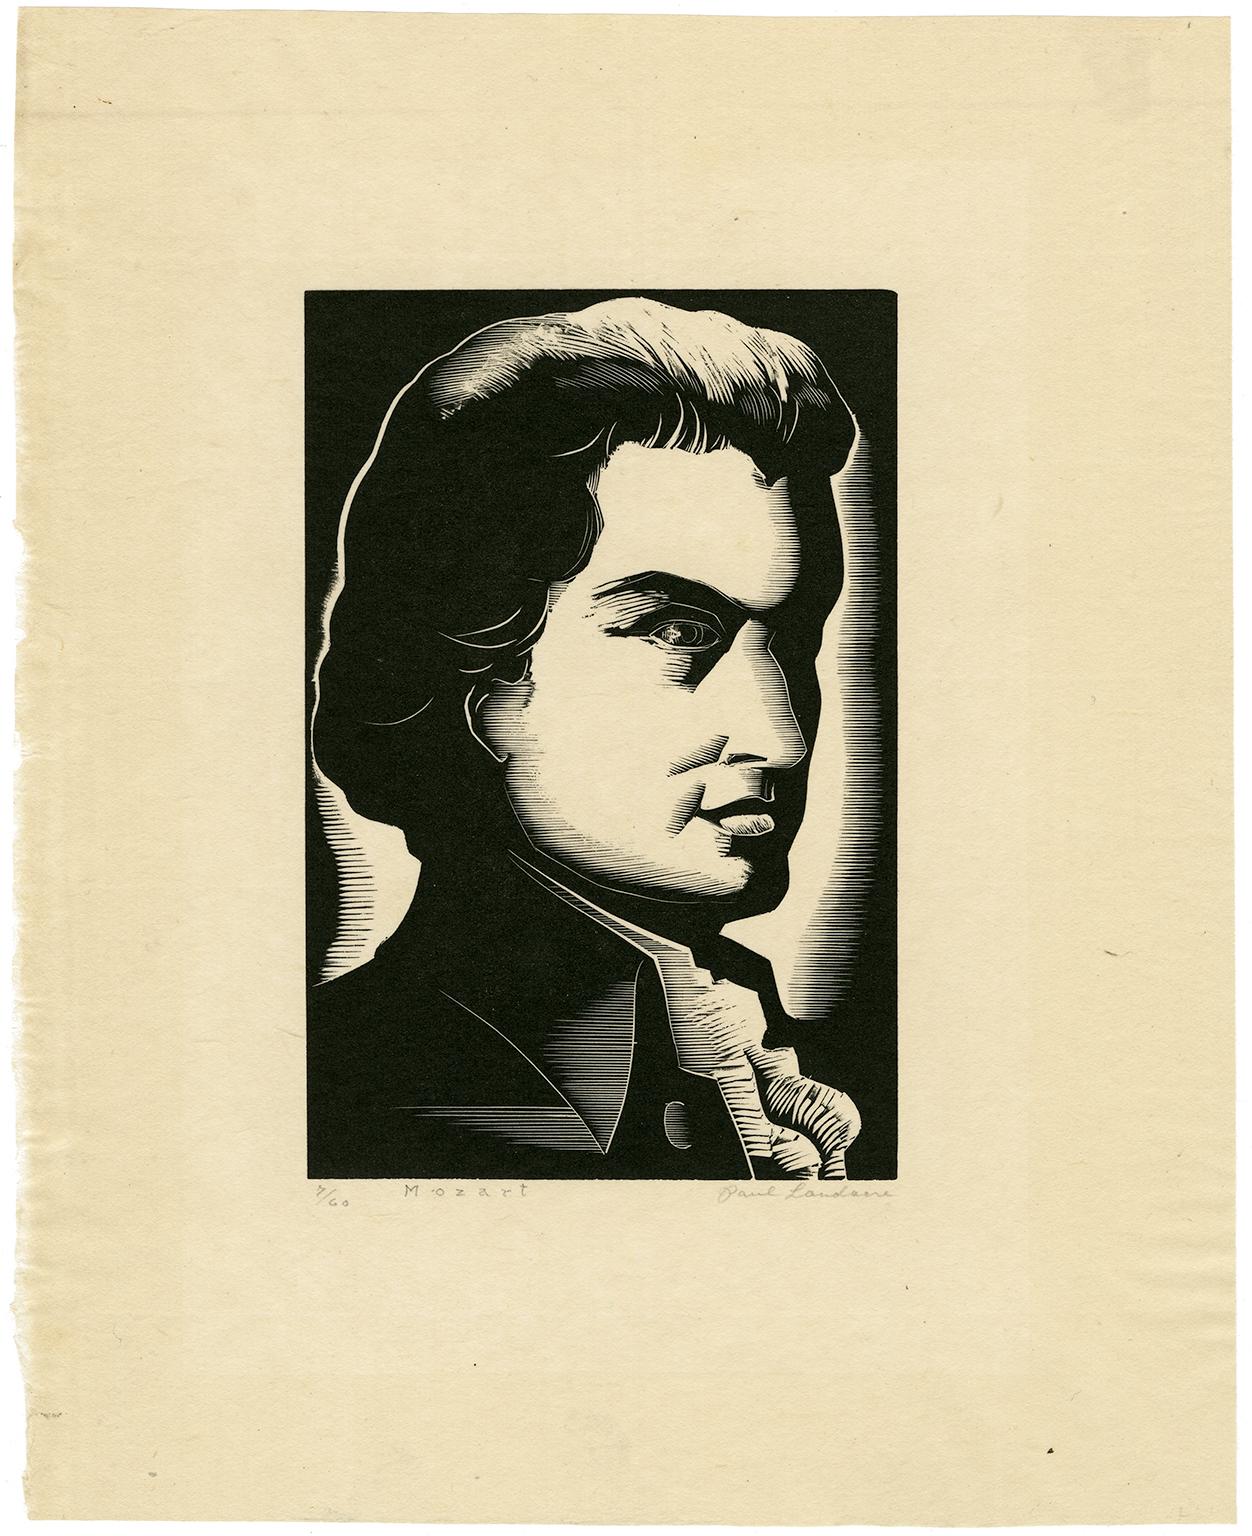 Mozart - Print by Paul Landacre